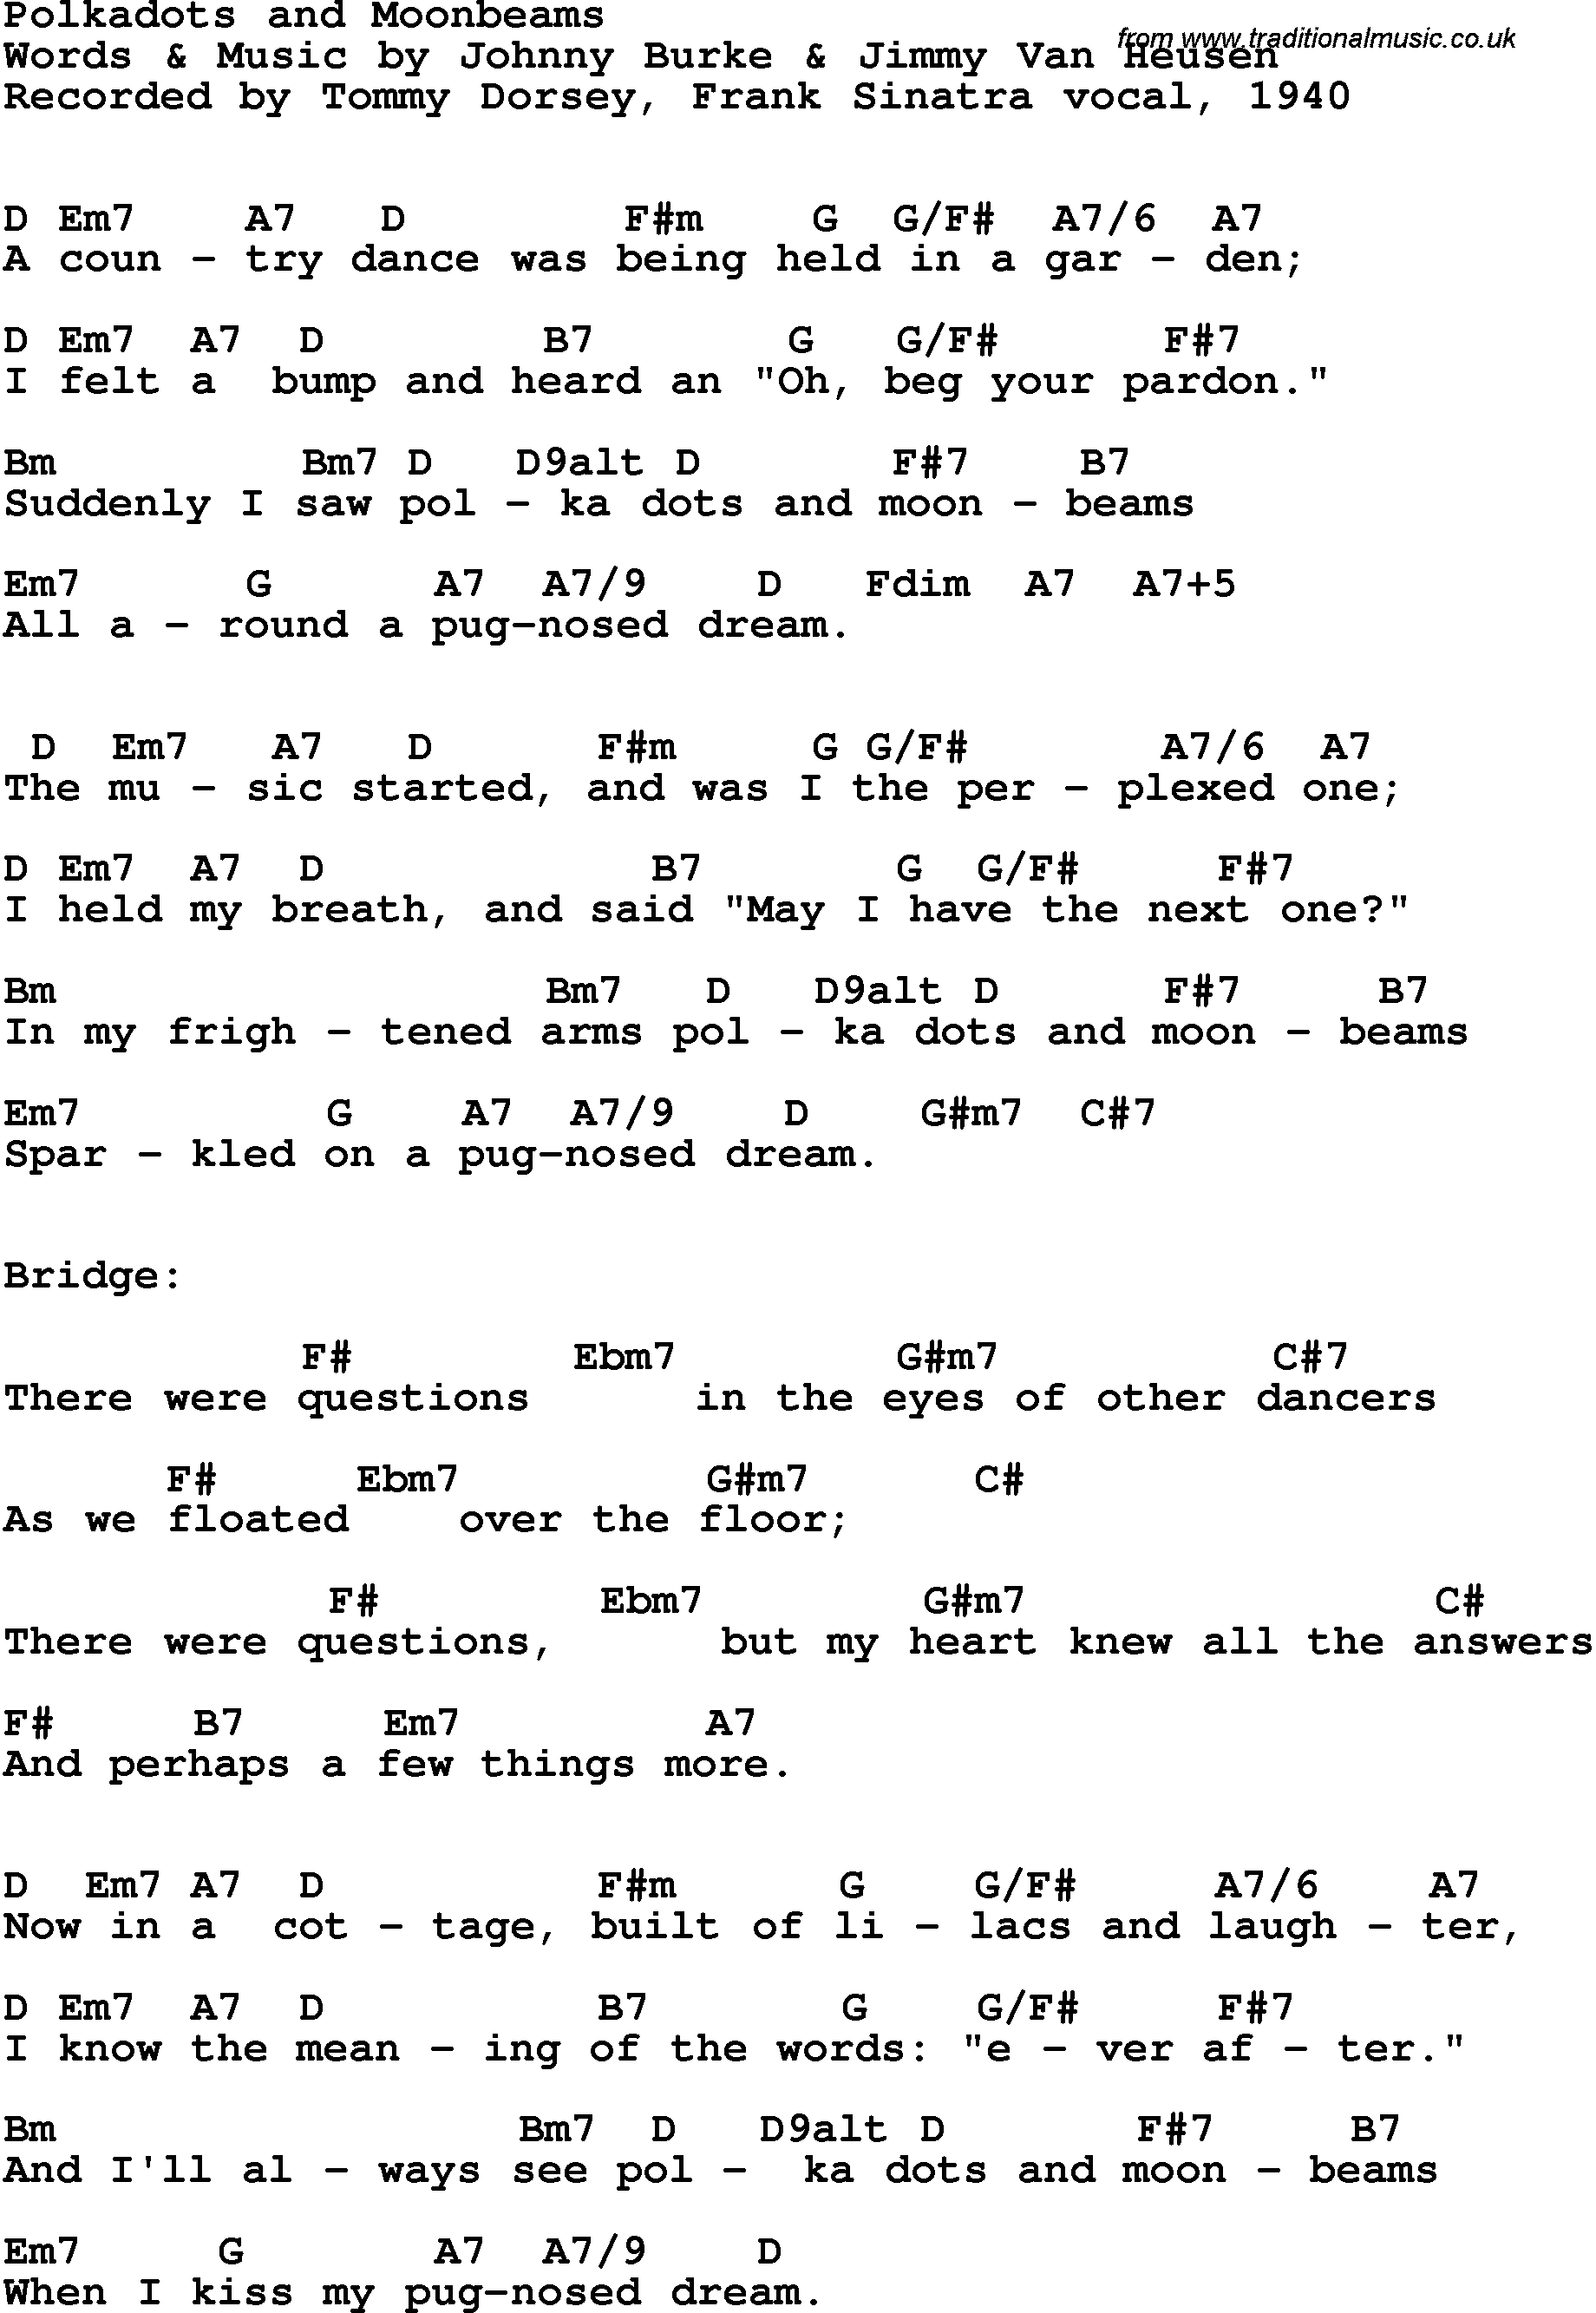 Song Lyrics with guitar chords for Polka Dots And Moonbeams - Tommy Dorsey, 1940, Frank Sinatra Vocal